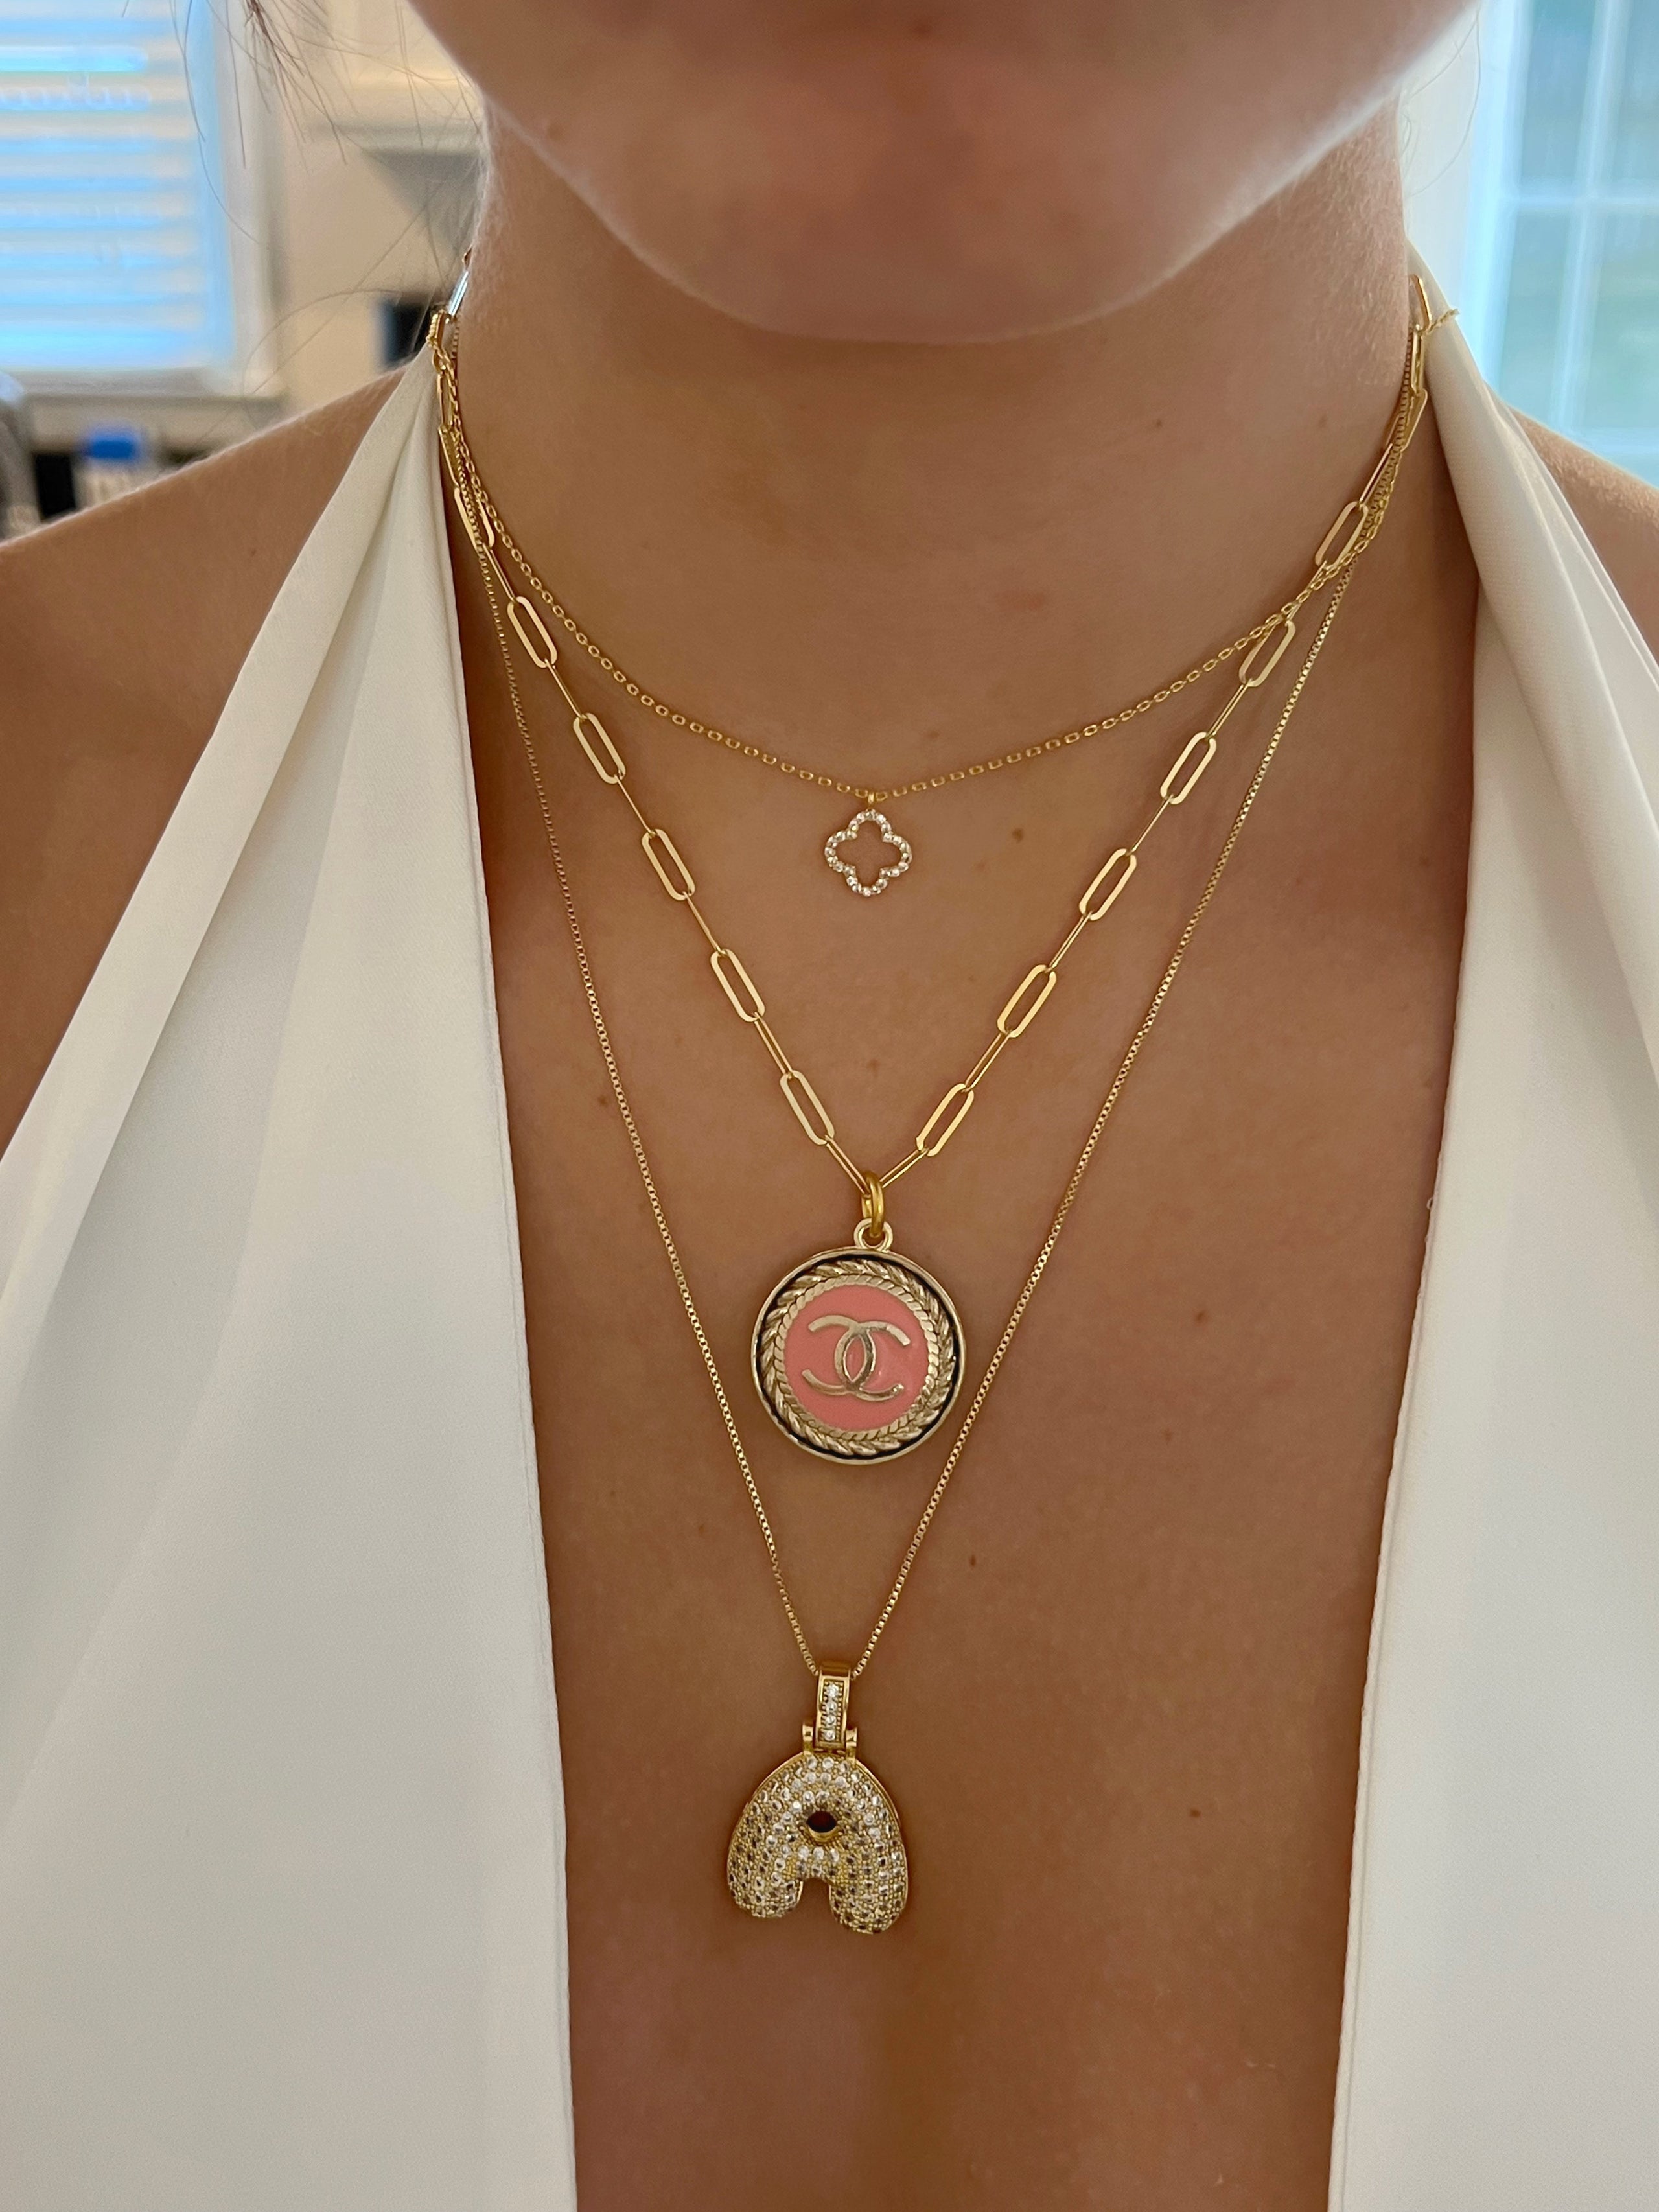 Vintage & Repurposed Chanel Button Necklaces